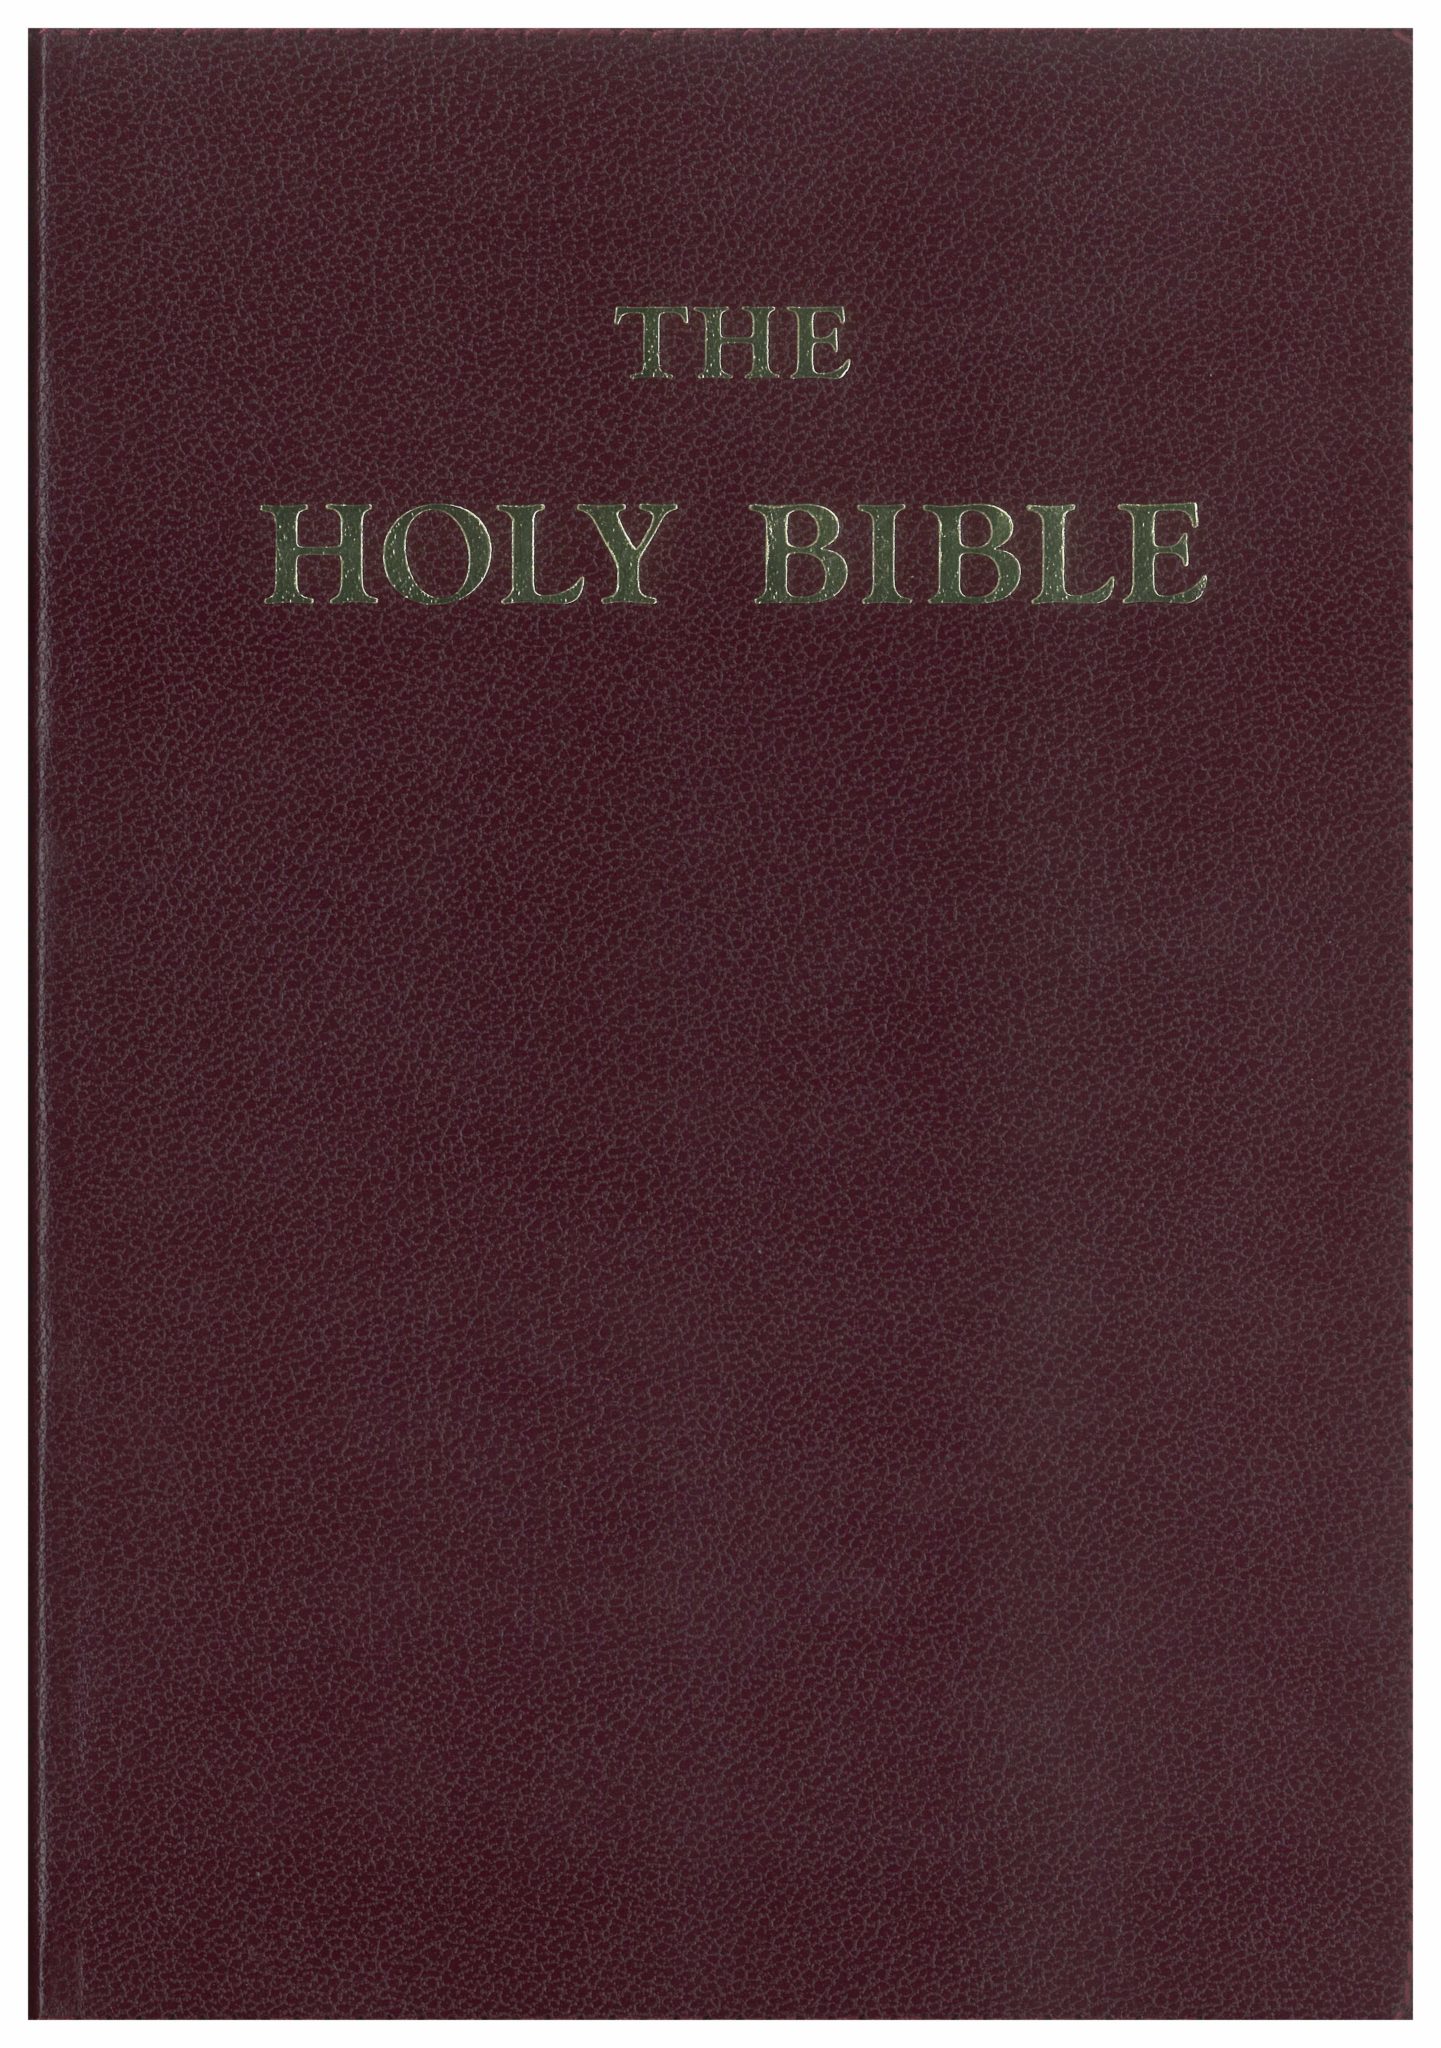 Douay-Rheims Bible (Standard size) - Fraternity Publications